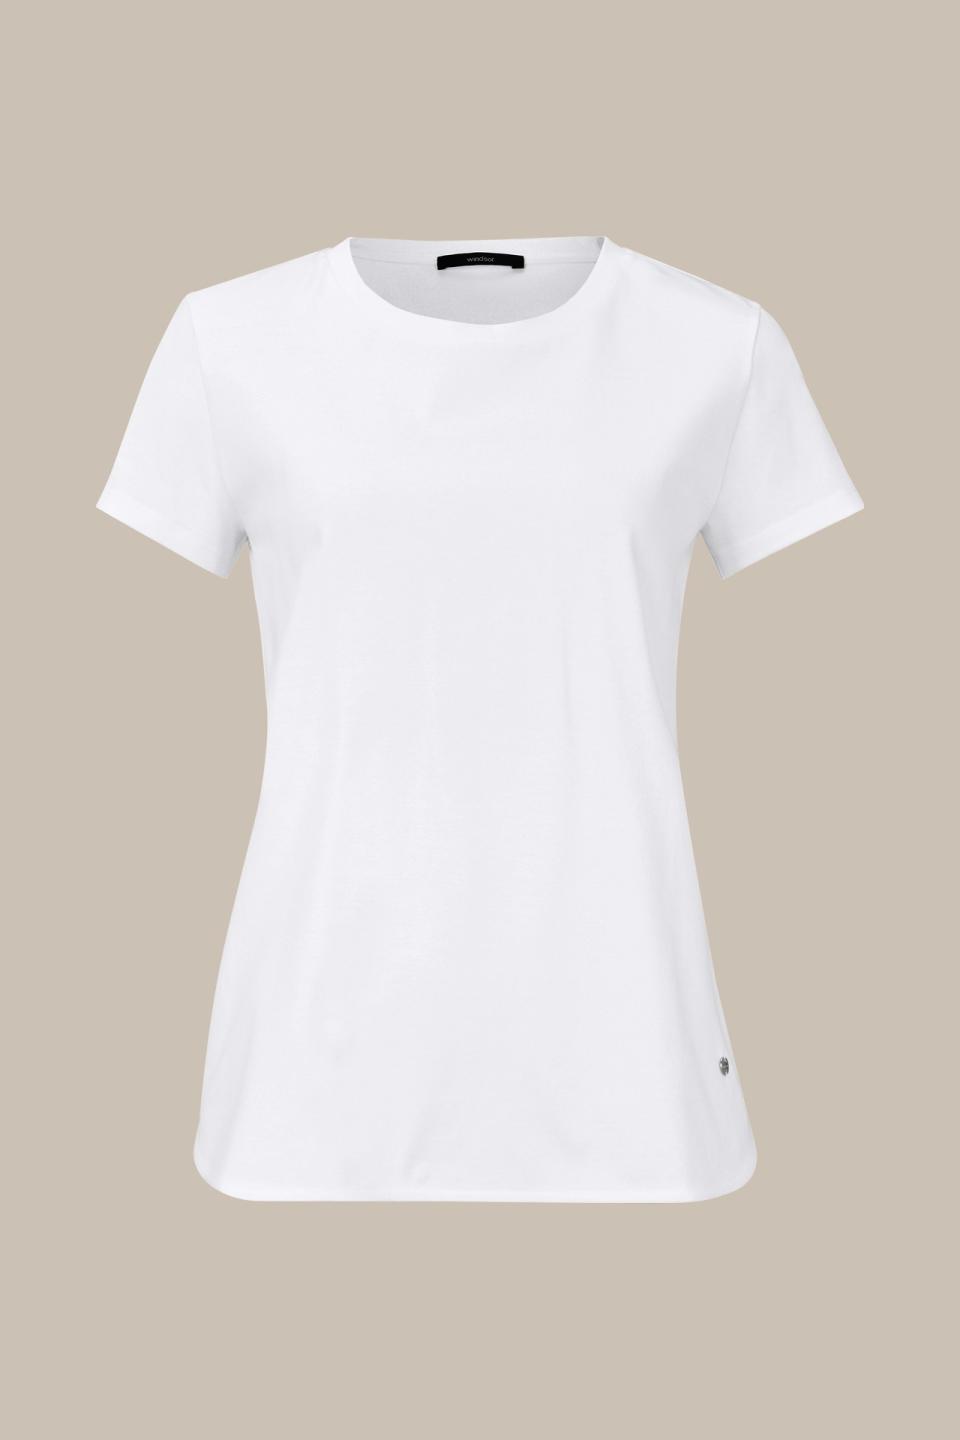 Le tee-shirt blanc